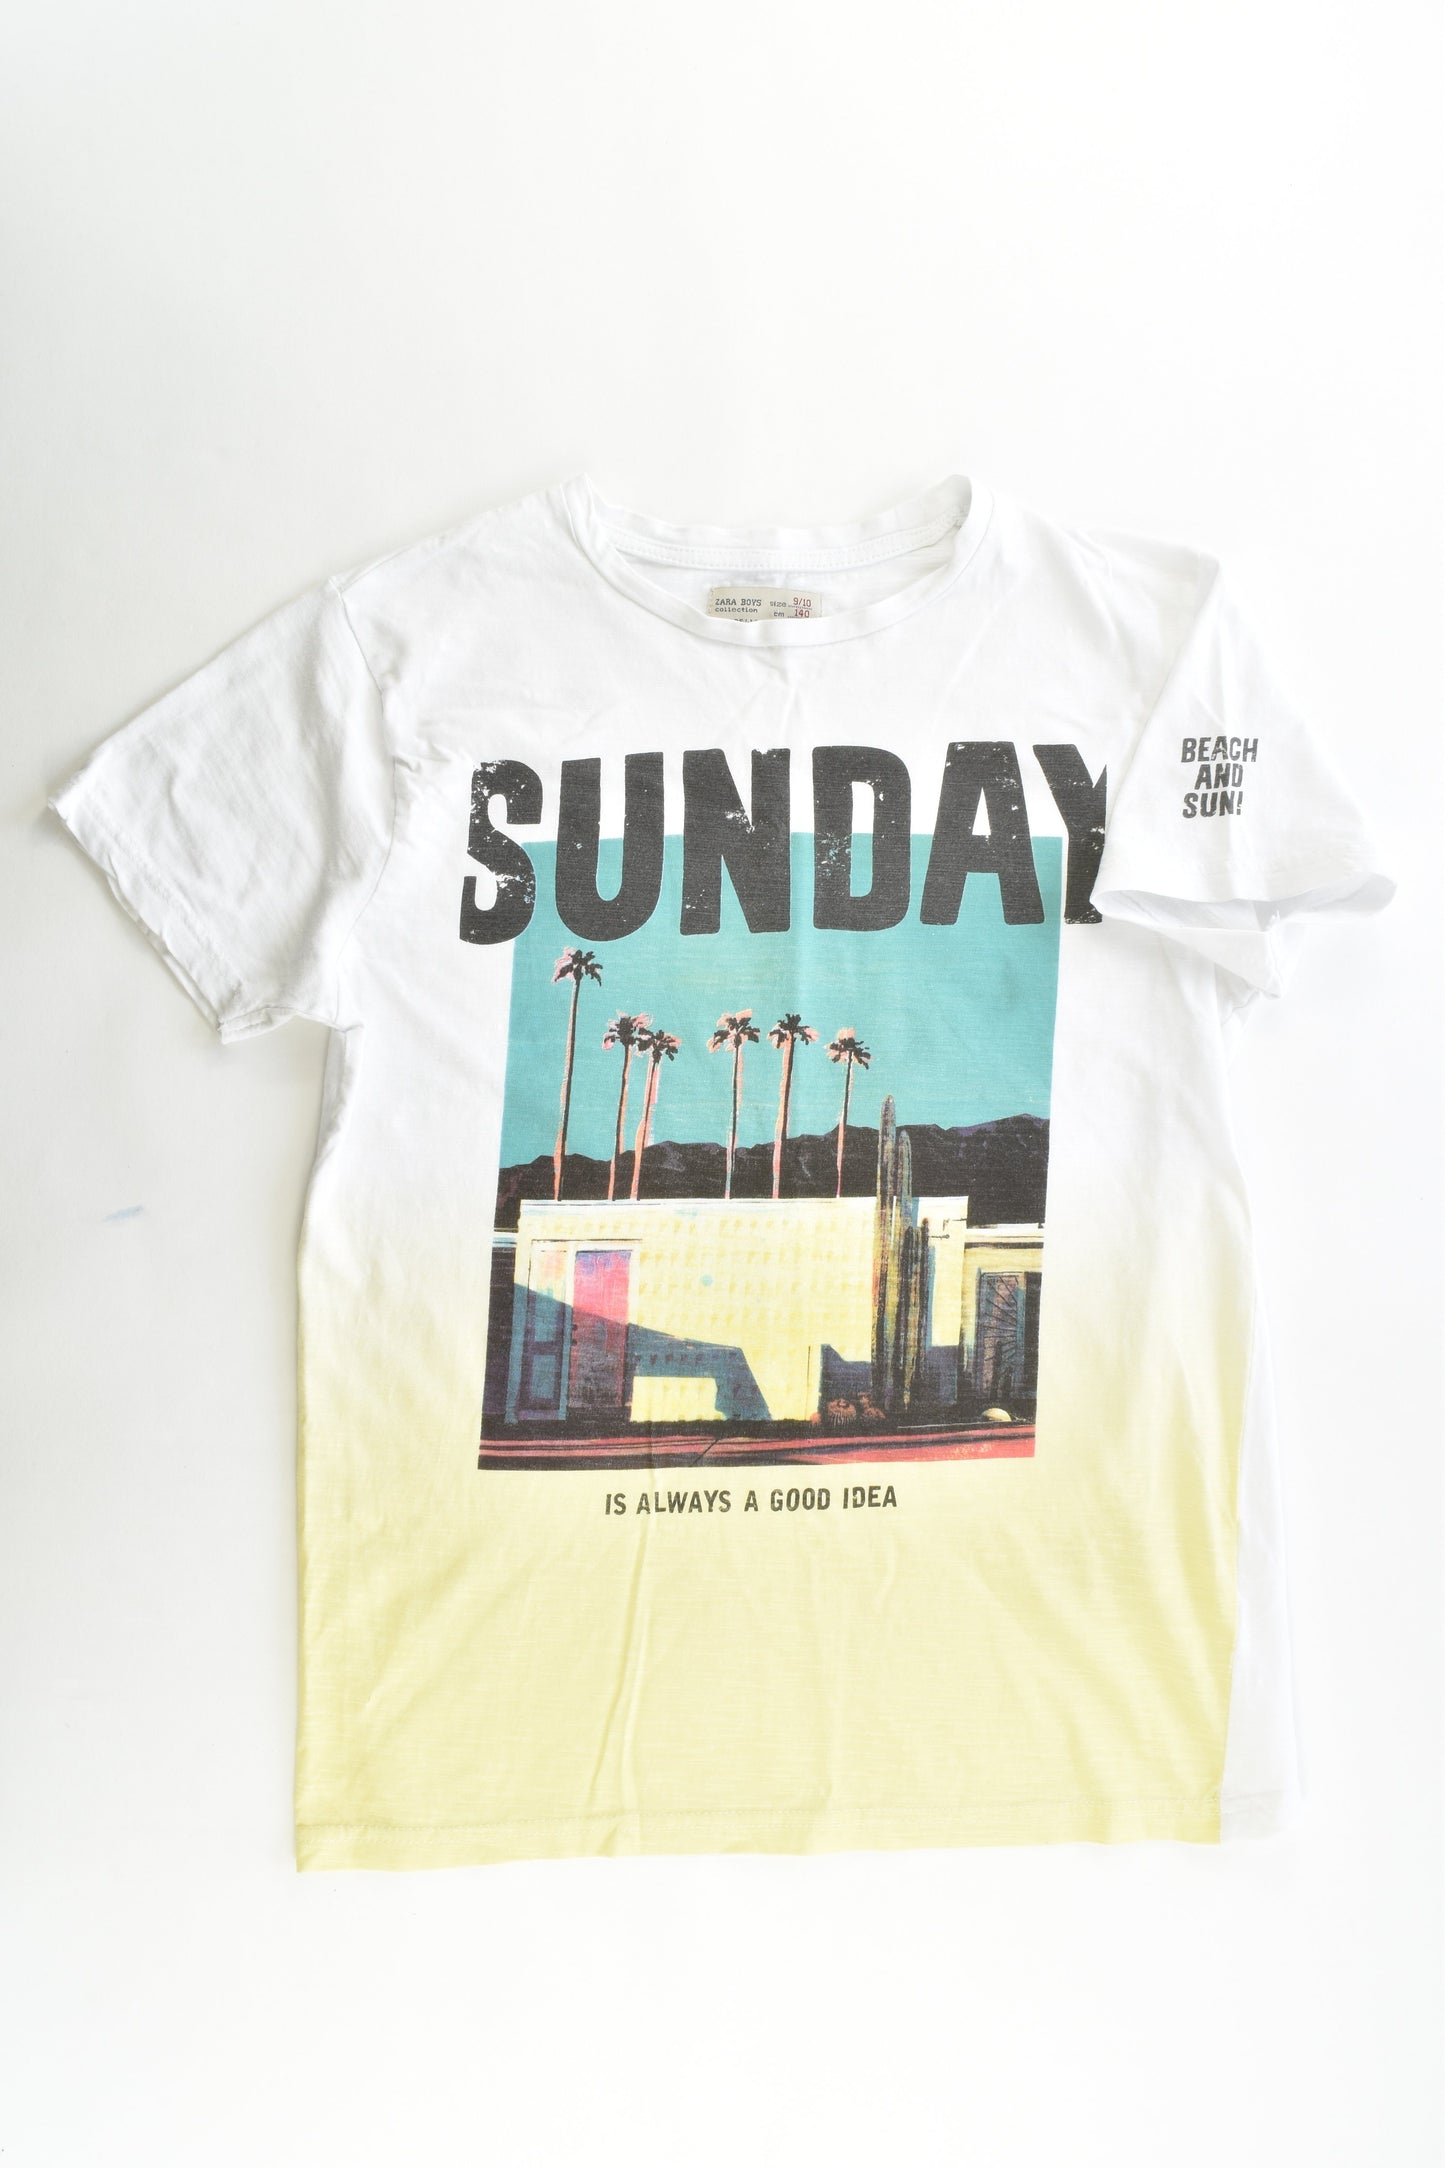 Zara Boys Size 9/19 (140 cm) "Sunday" T-shirt